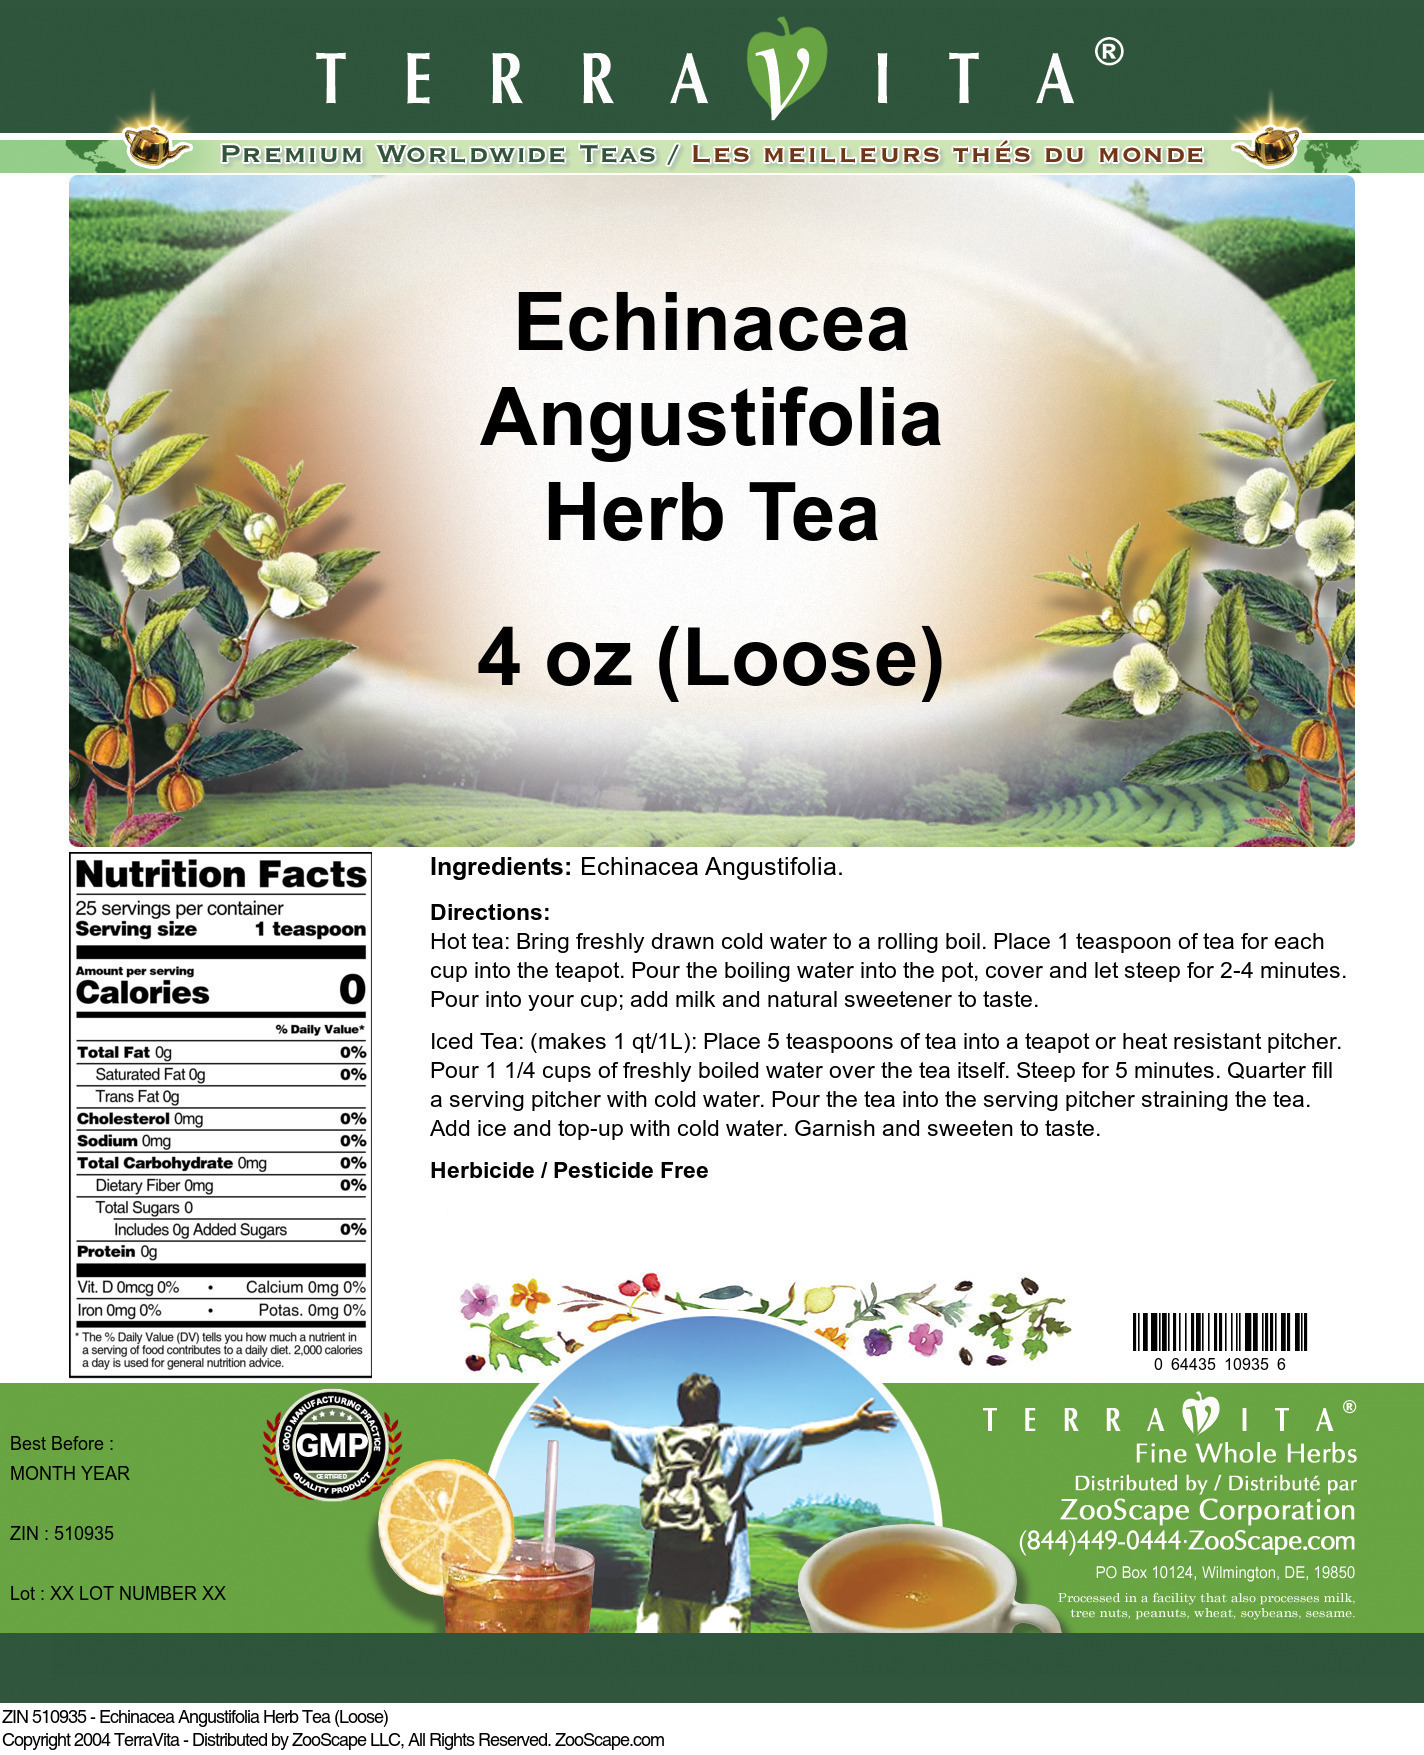 Echinacea Angustifolia Herb Tea (Loose) - Label